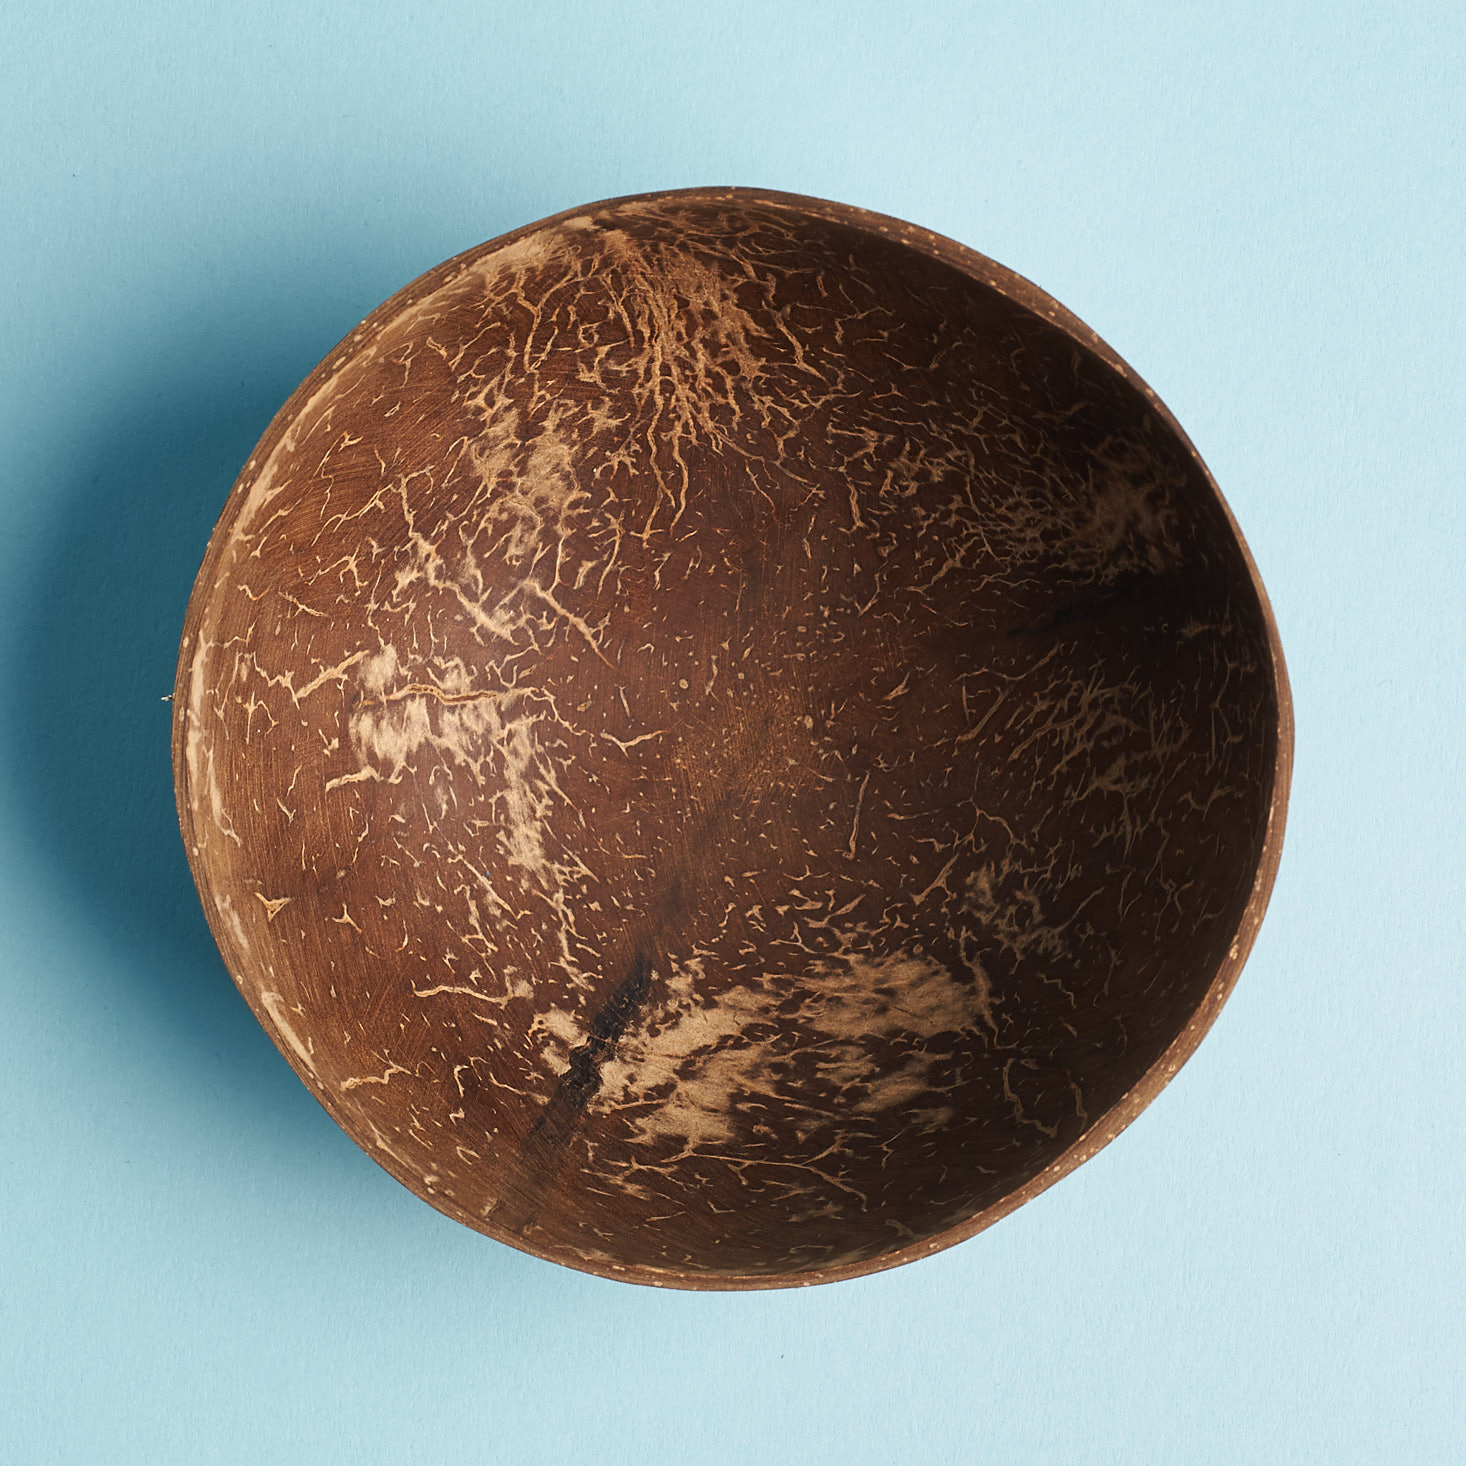 Tasu April 2019 beauty box review coconut bowl top